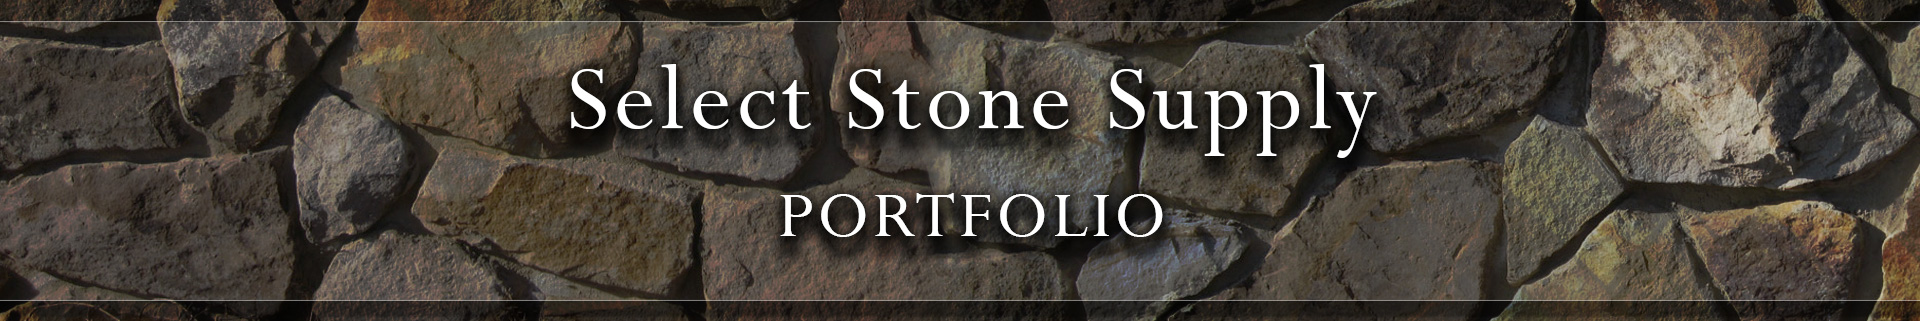 Select Stone Supply Portfolio